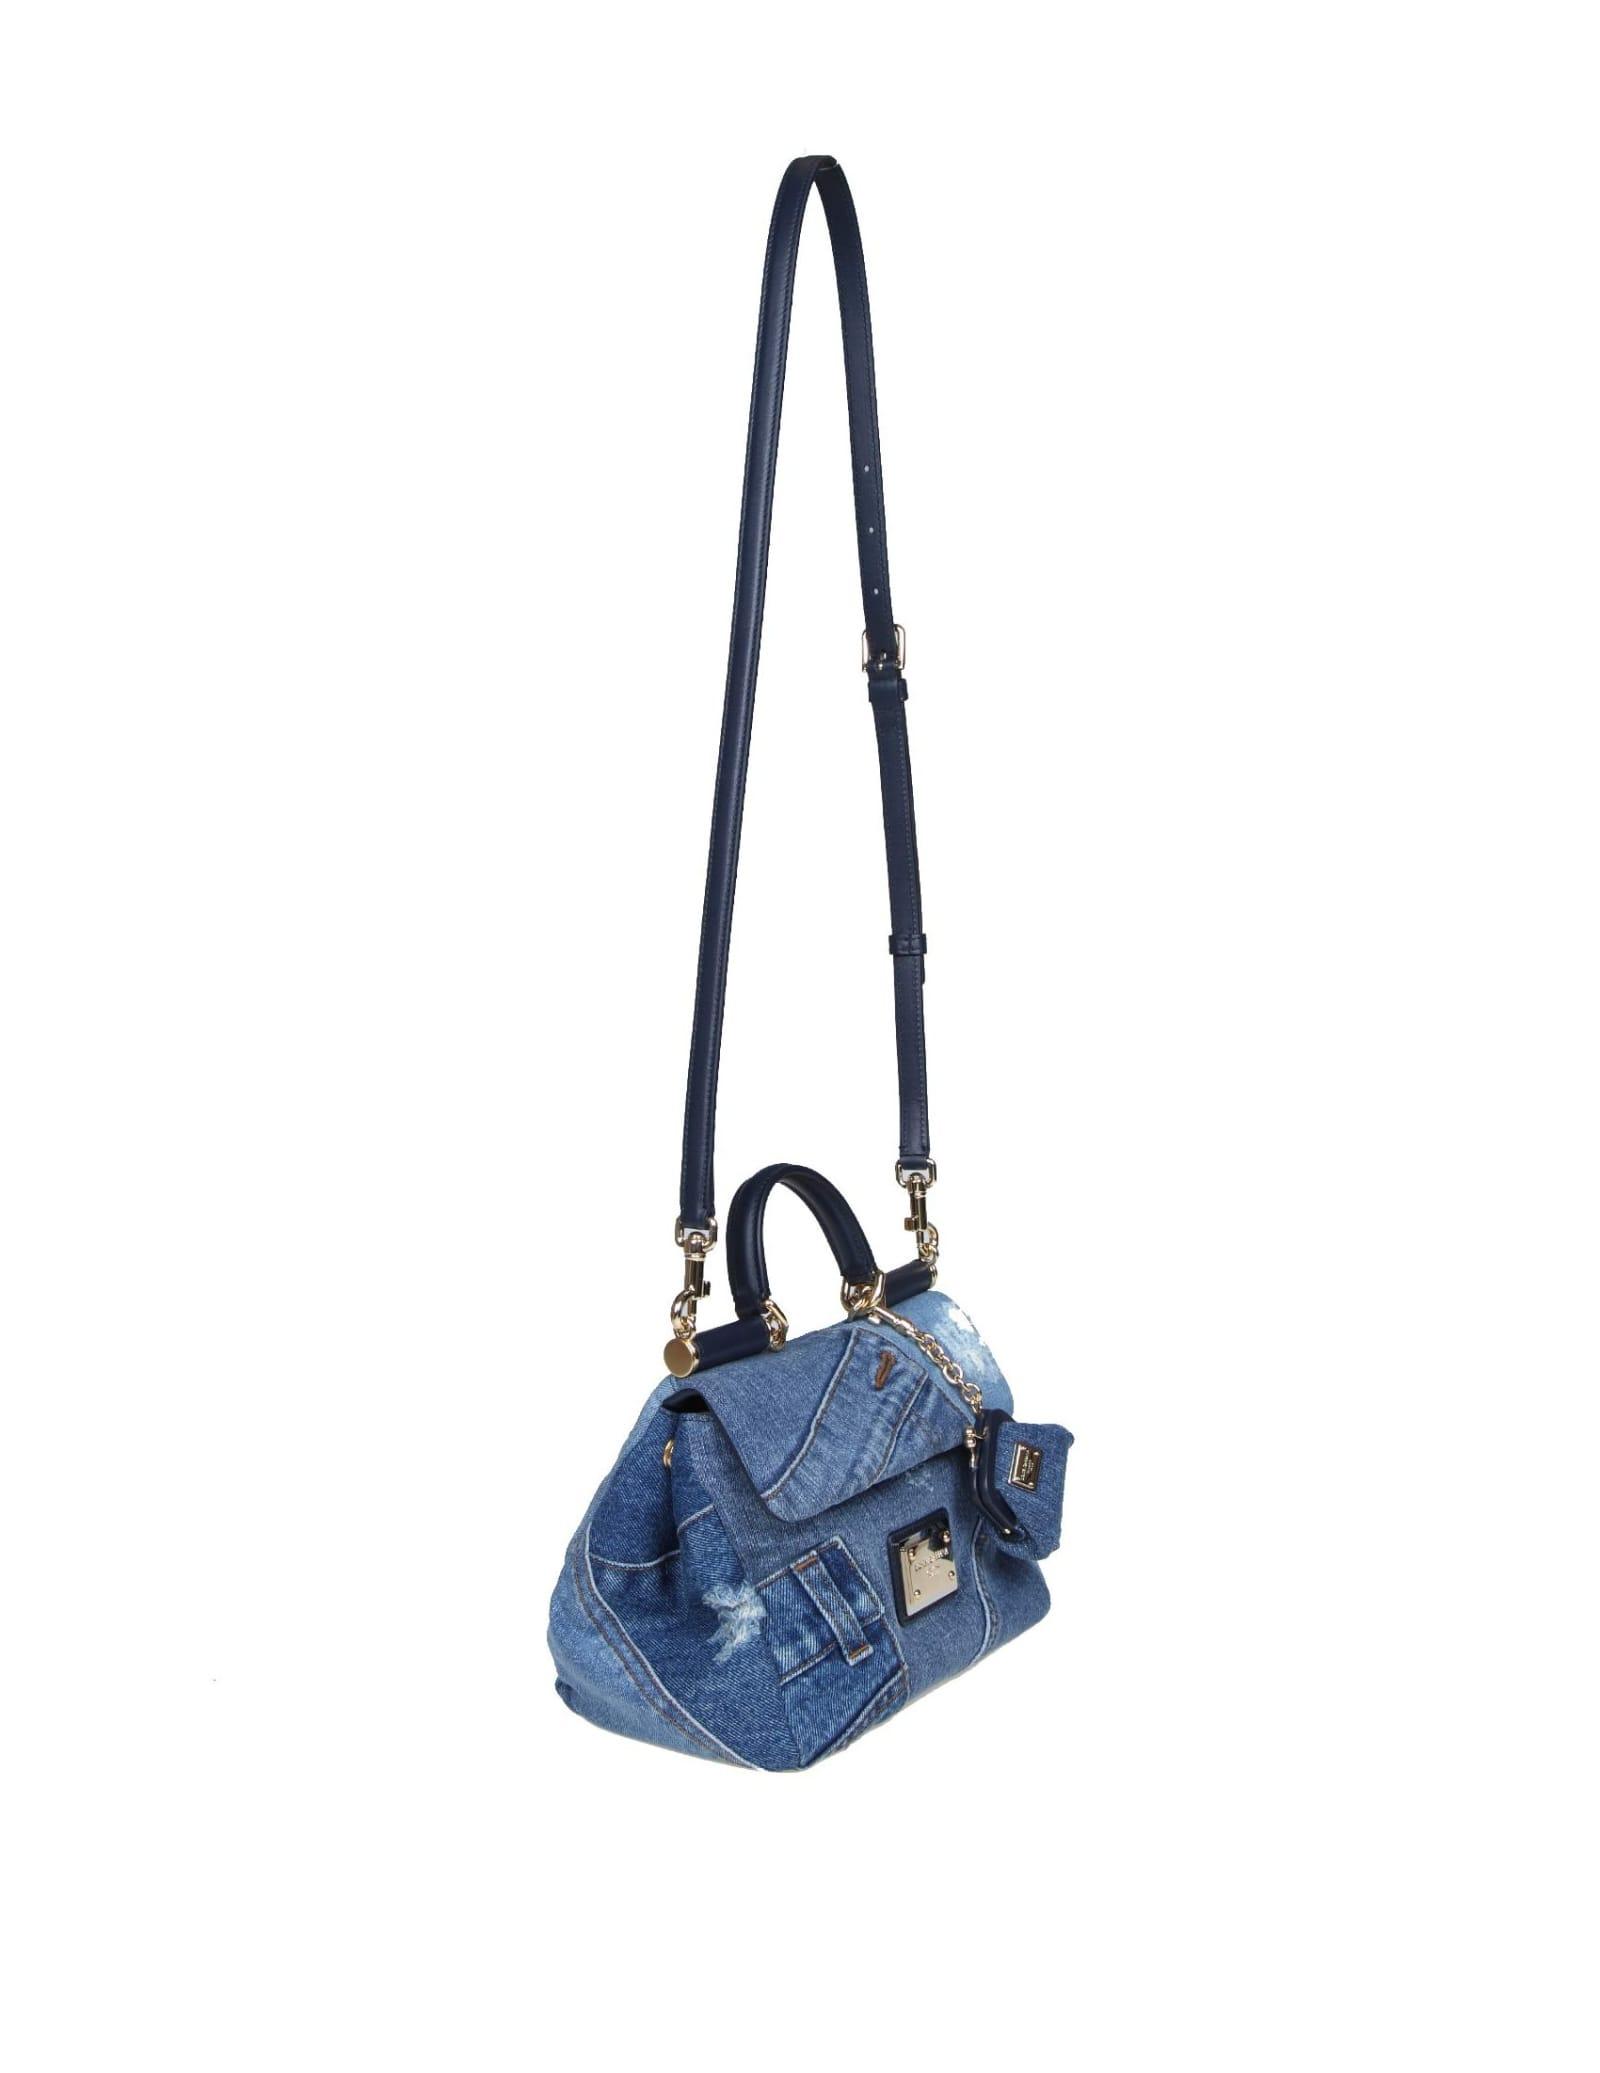 Sicily Small Soft Handbag - Dolce & Gabbana - Denim - Denim